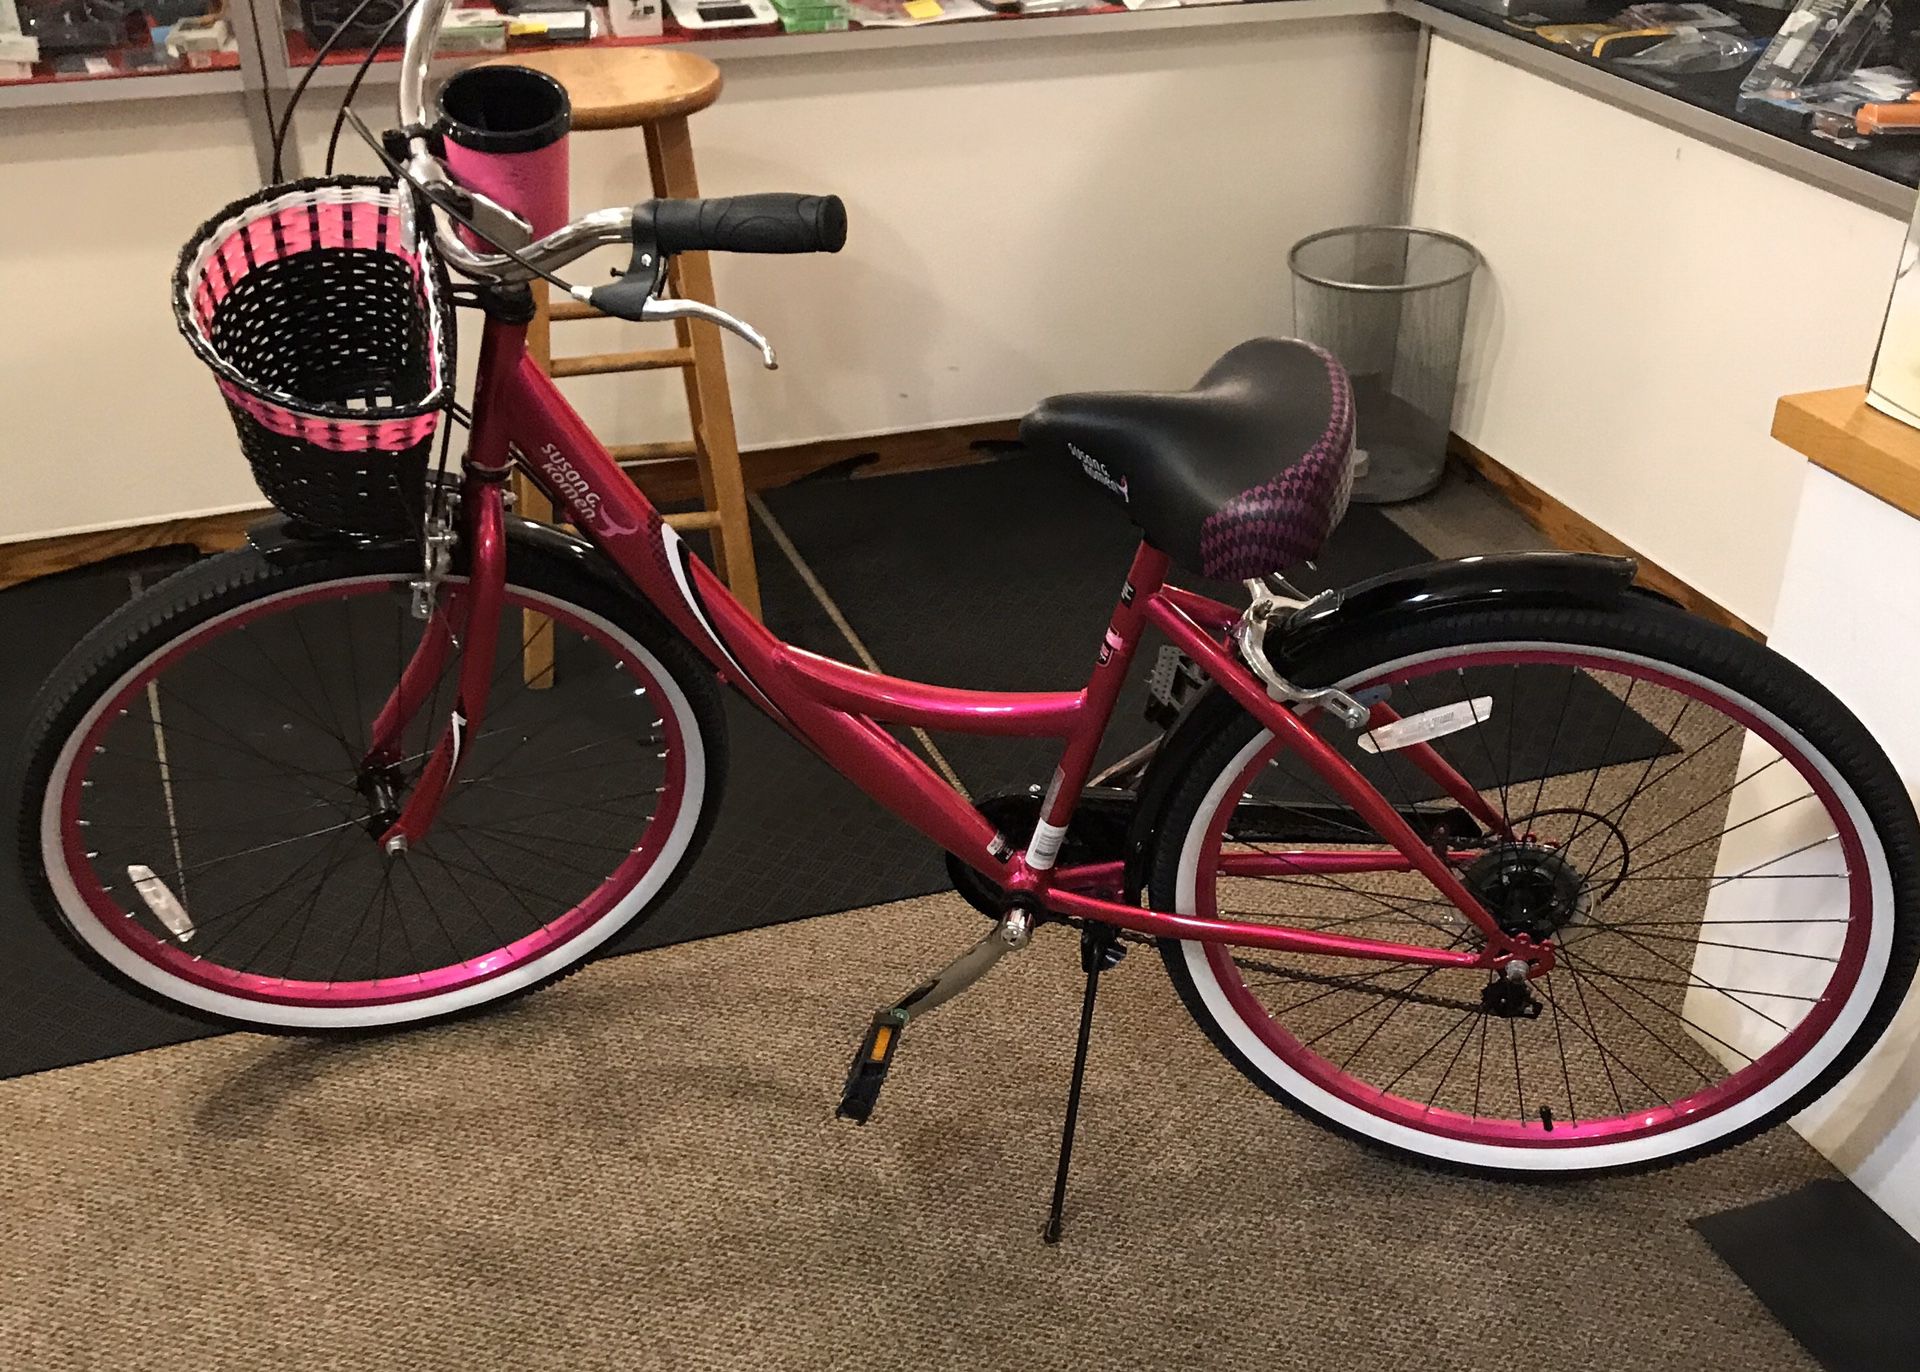 SUSAN G KOMEN CRUISER 26” Women’s Multi Speed Bike/Hot Pink/Mint Condition